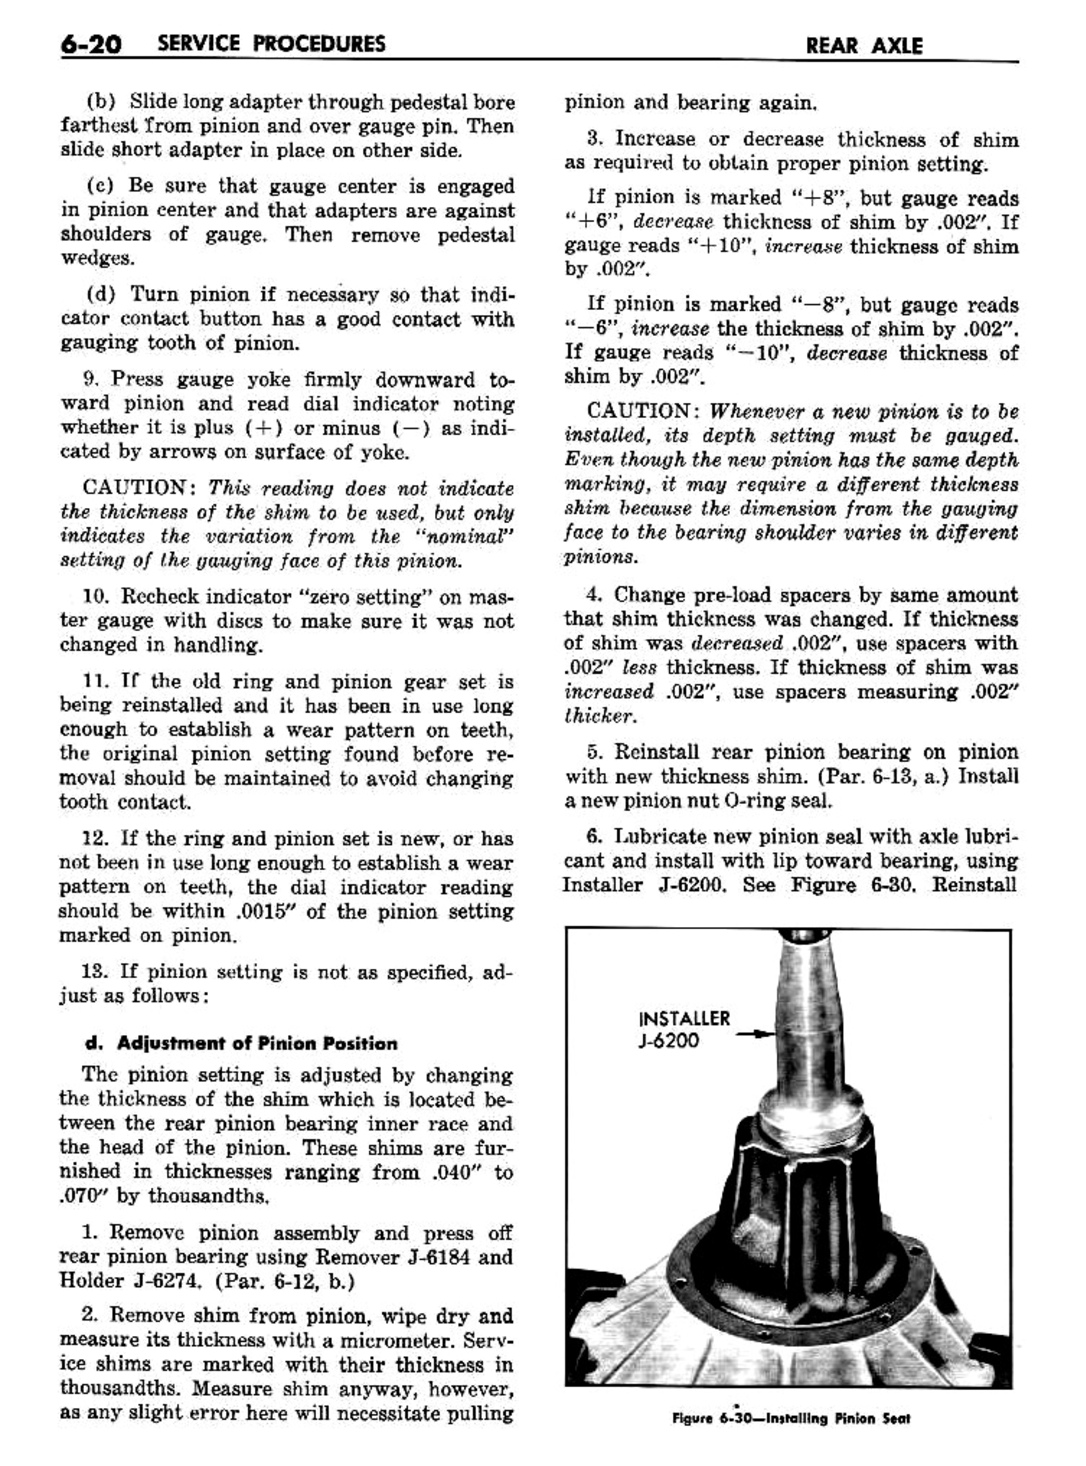 n_07 1960 Buick Shop Manual - Rear Axle-020-020.jpg